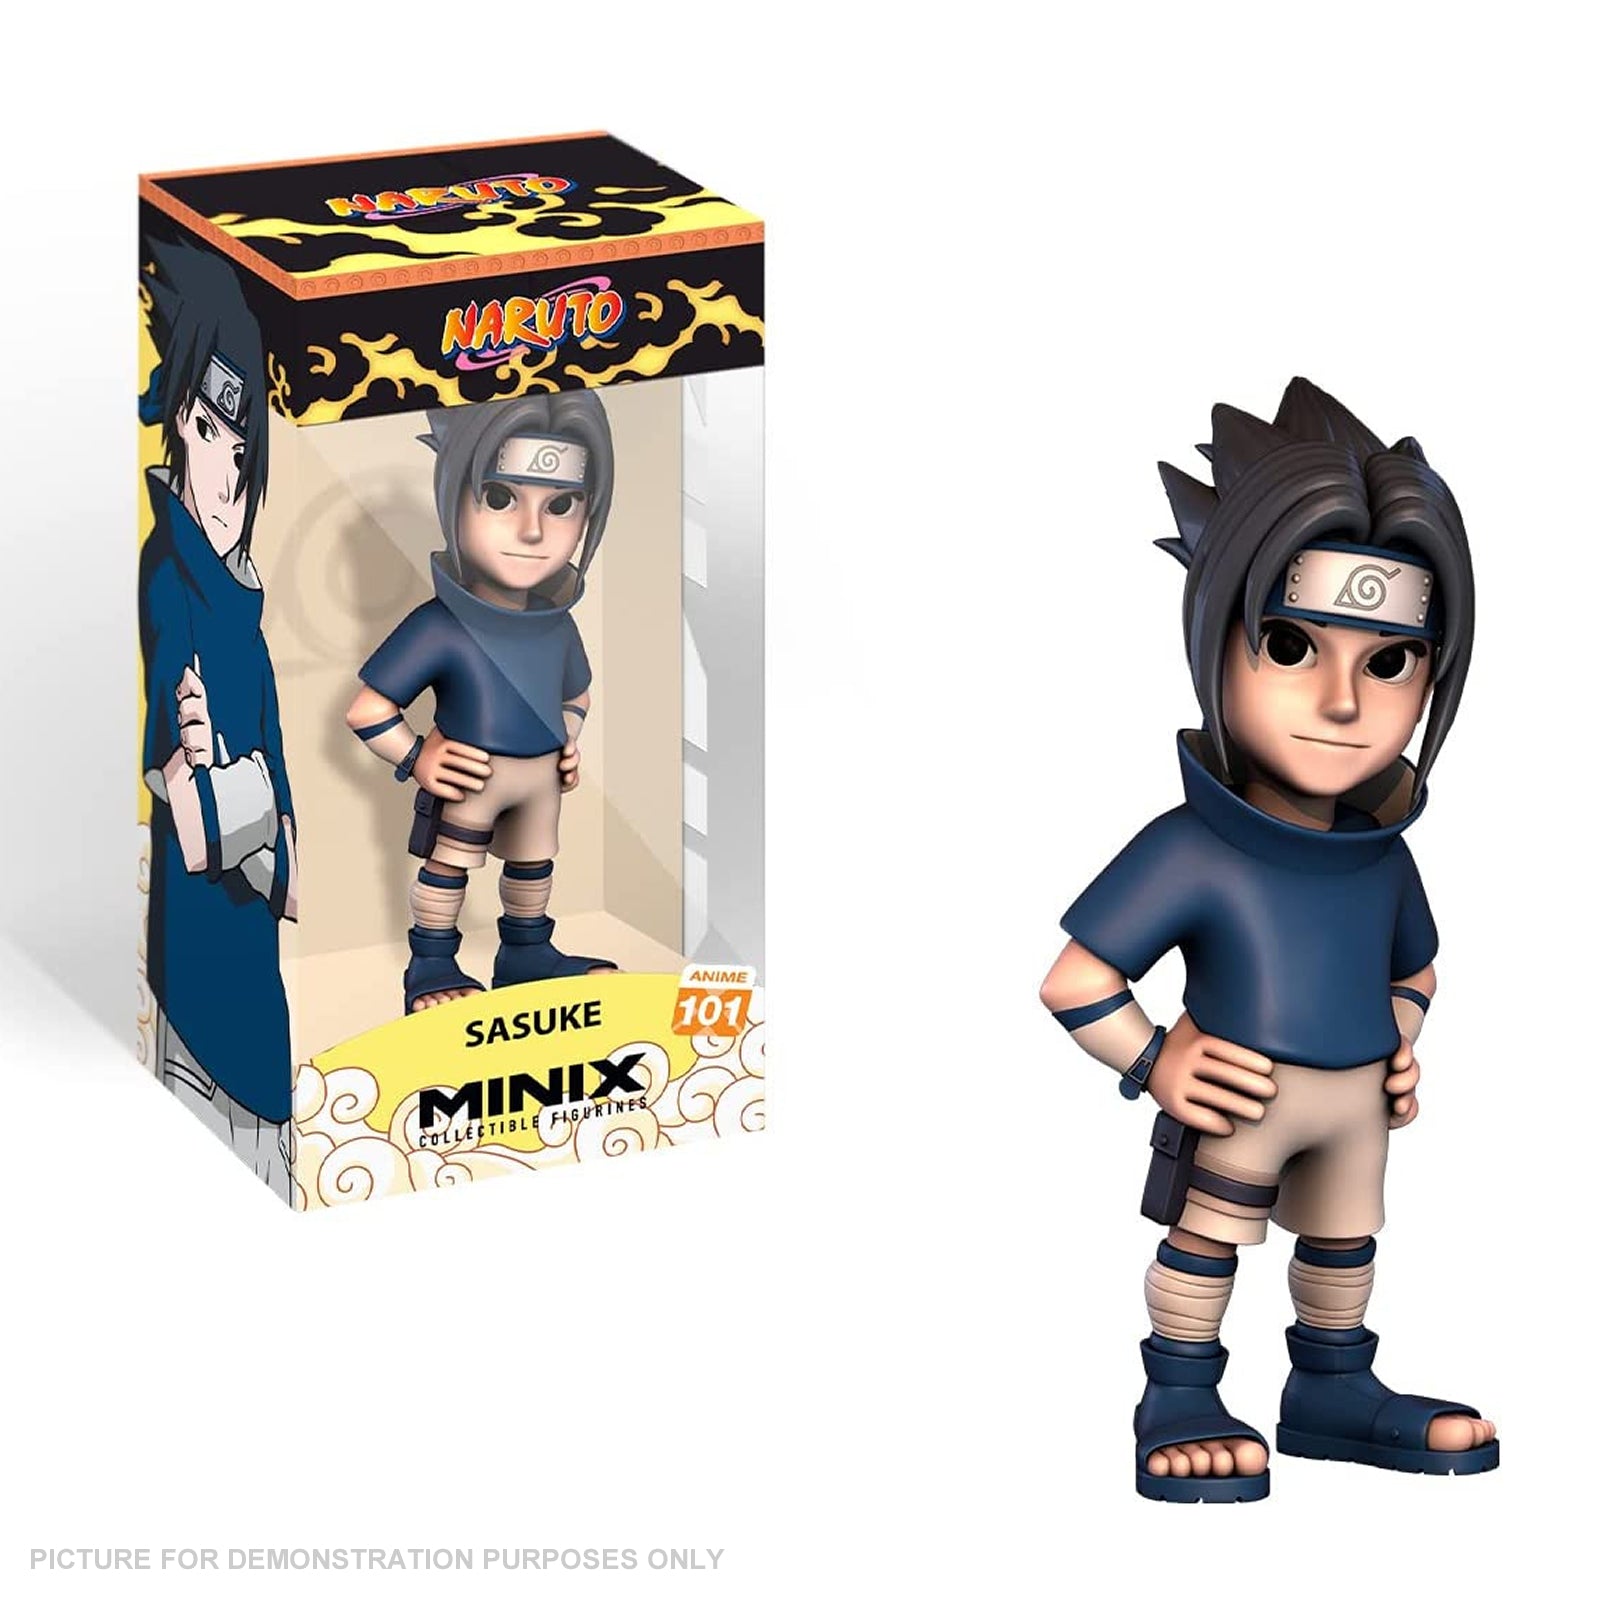 MINIX Collectable Figurine - SASUKE - Naruto